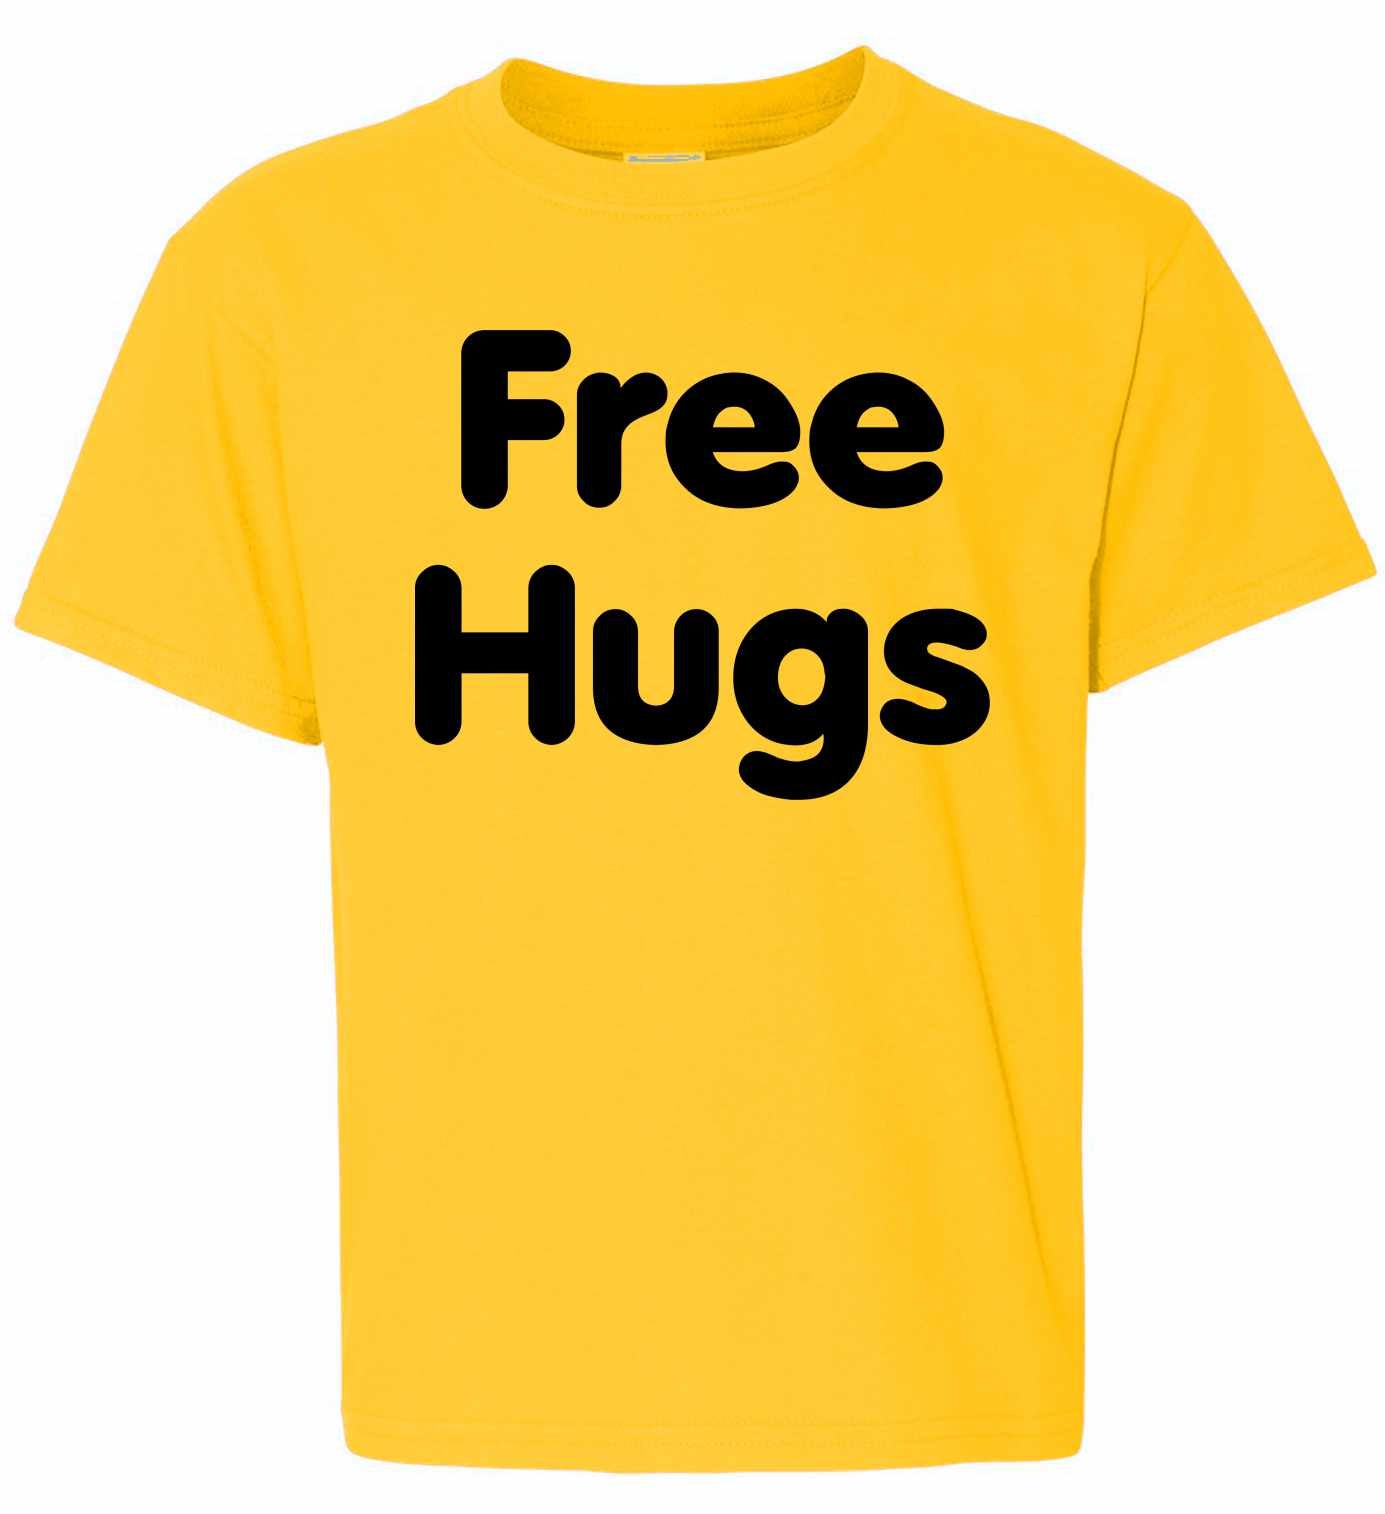 FREE HUGS on Kids T-Shirt